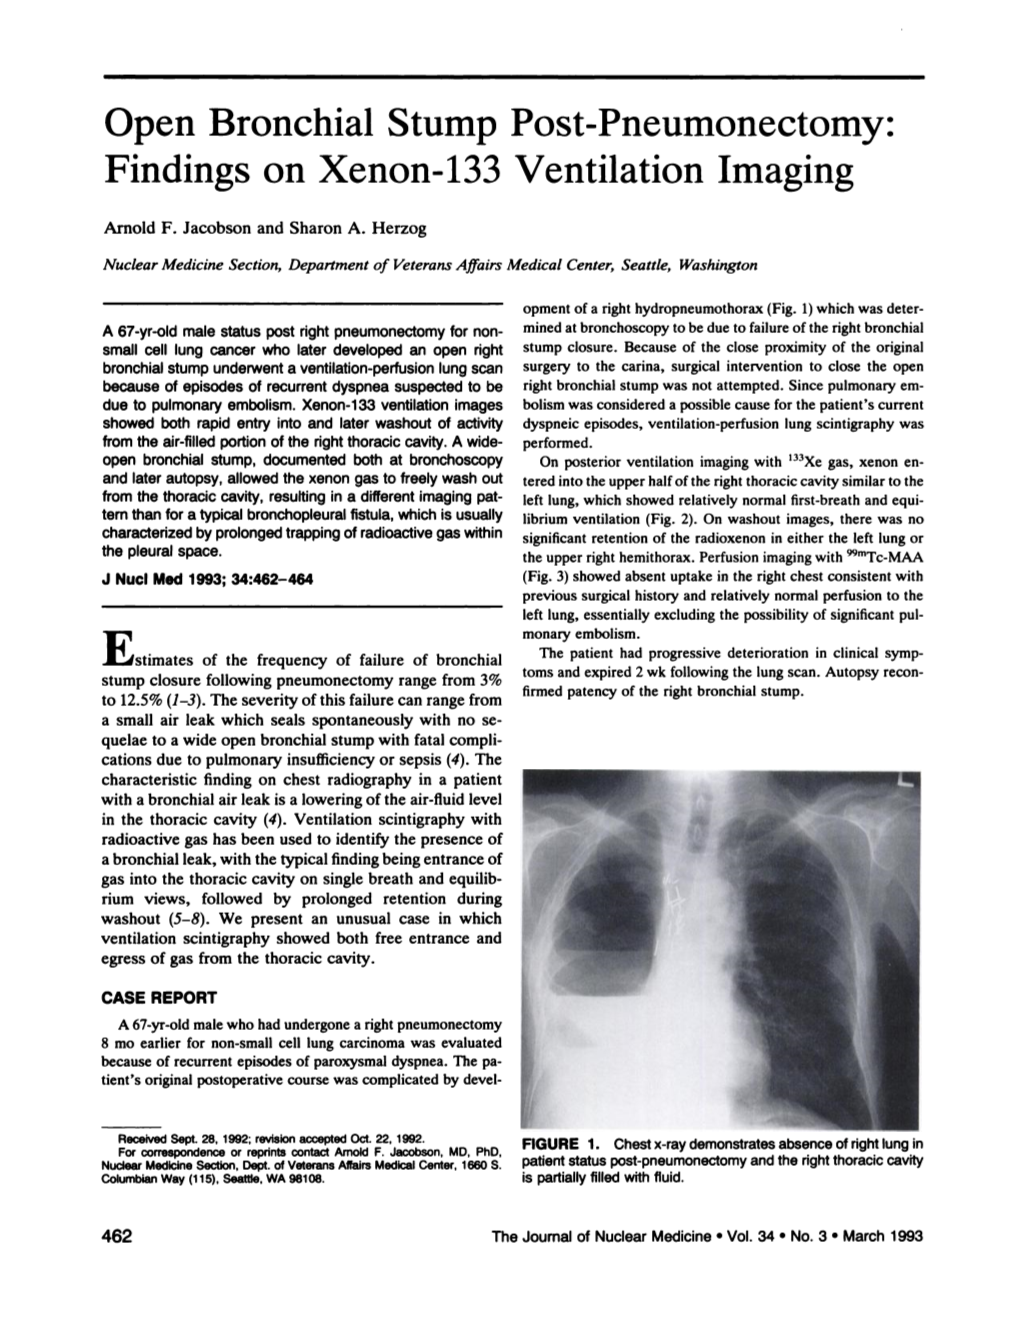 Open Bronchial Stump Post-Pneumonectomy: Findings on Xenon-133 Ventilation Imaging